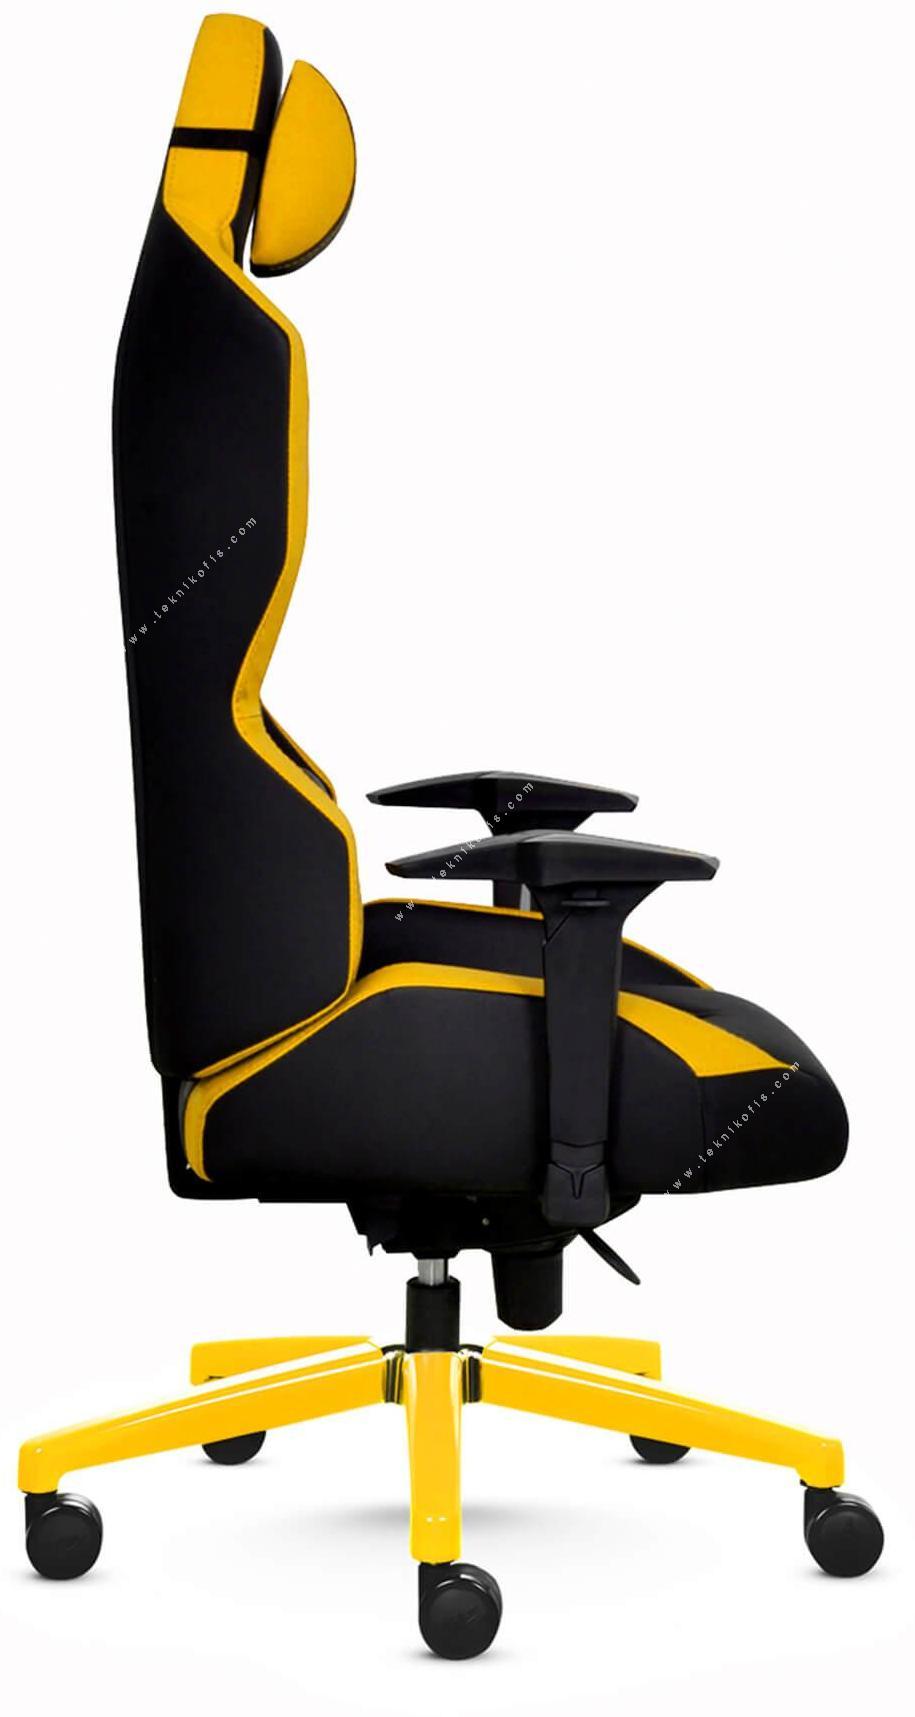 xdrive kasırga oyuncu koltuğu sarı siyah